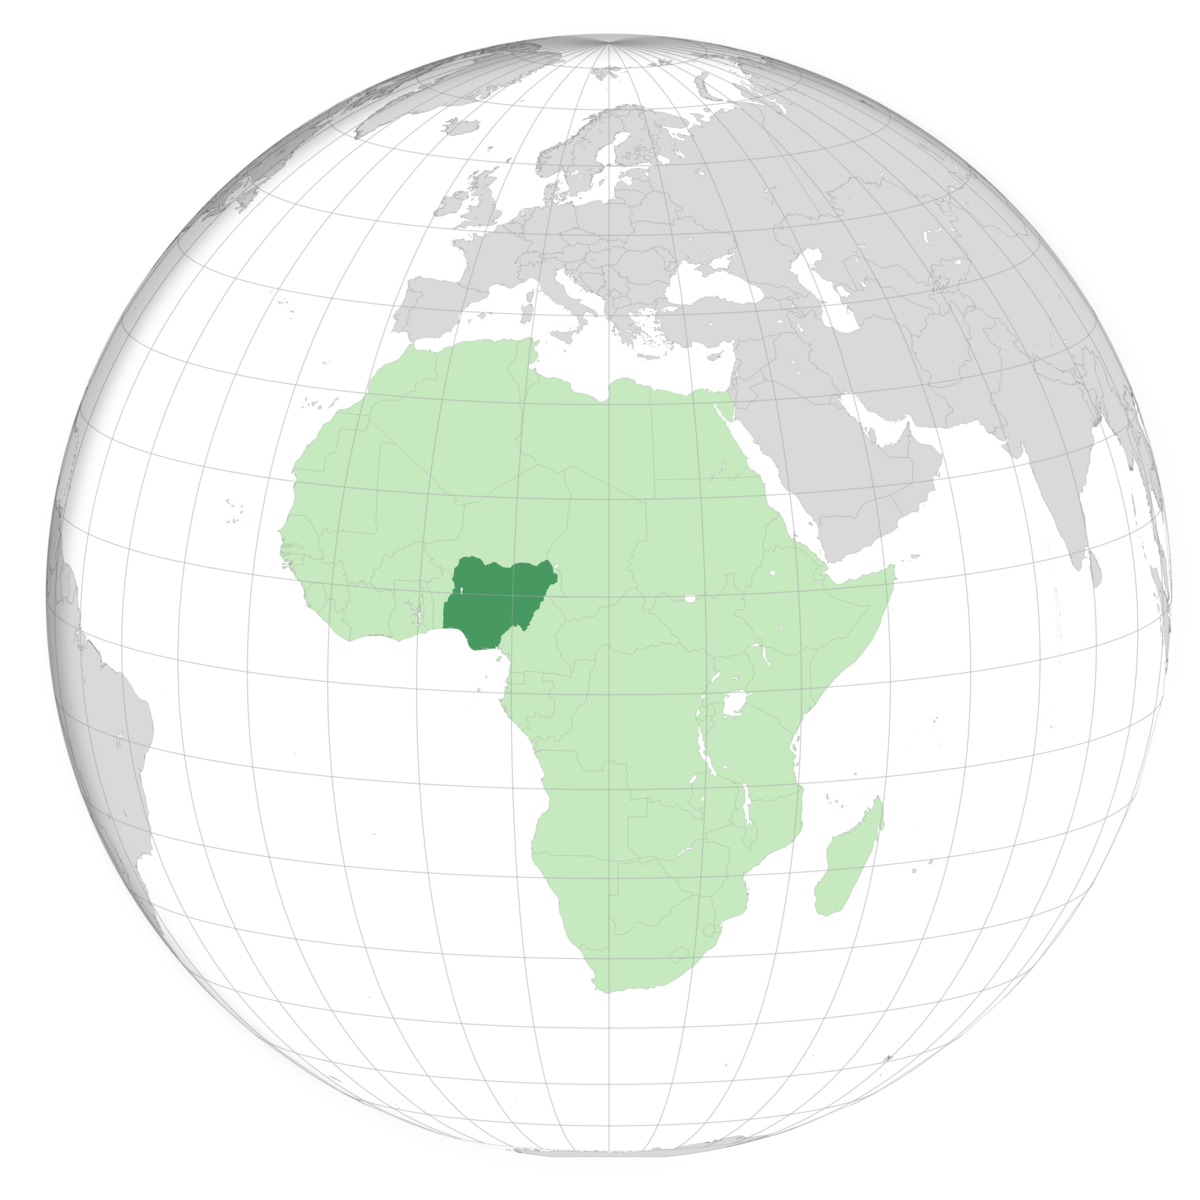 plassering av Nigeria på jordkloden. Kart